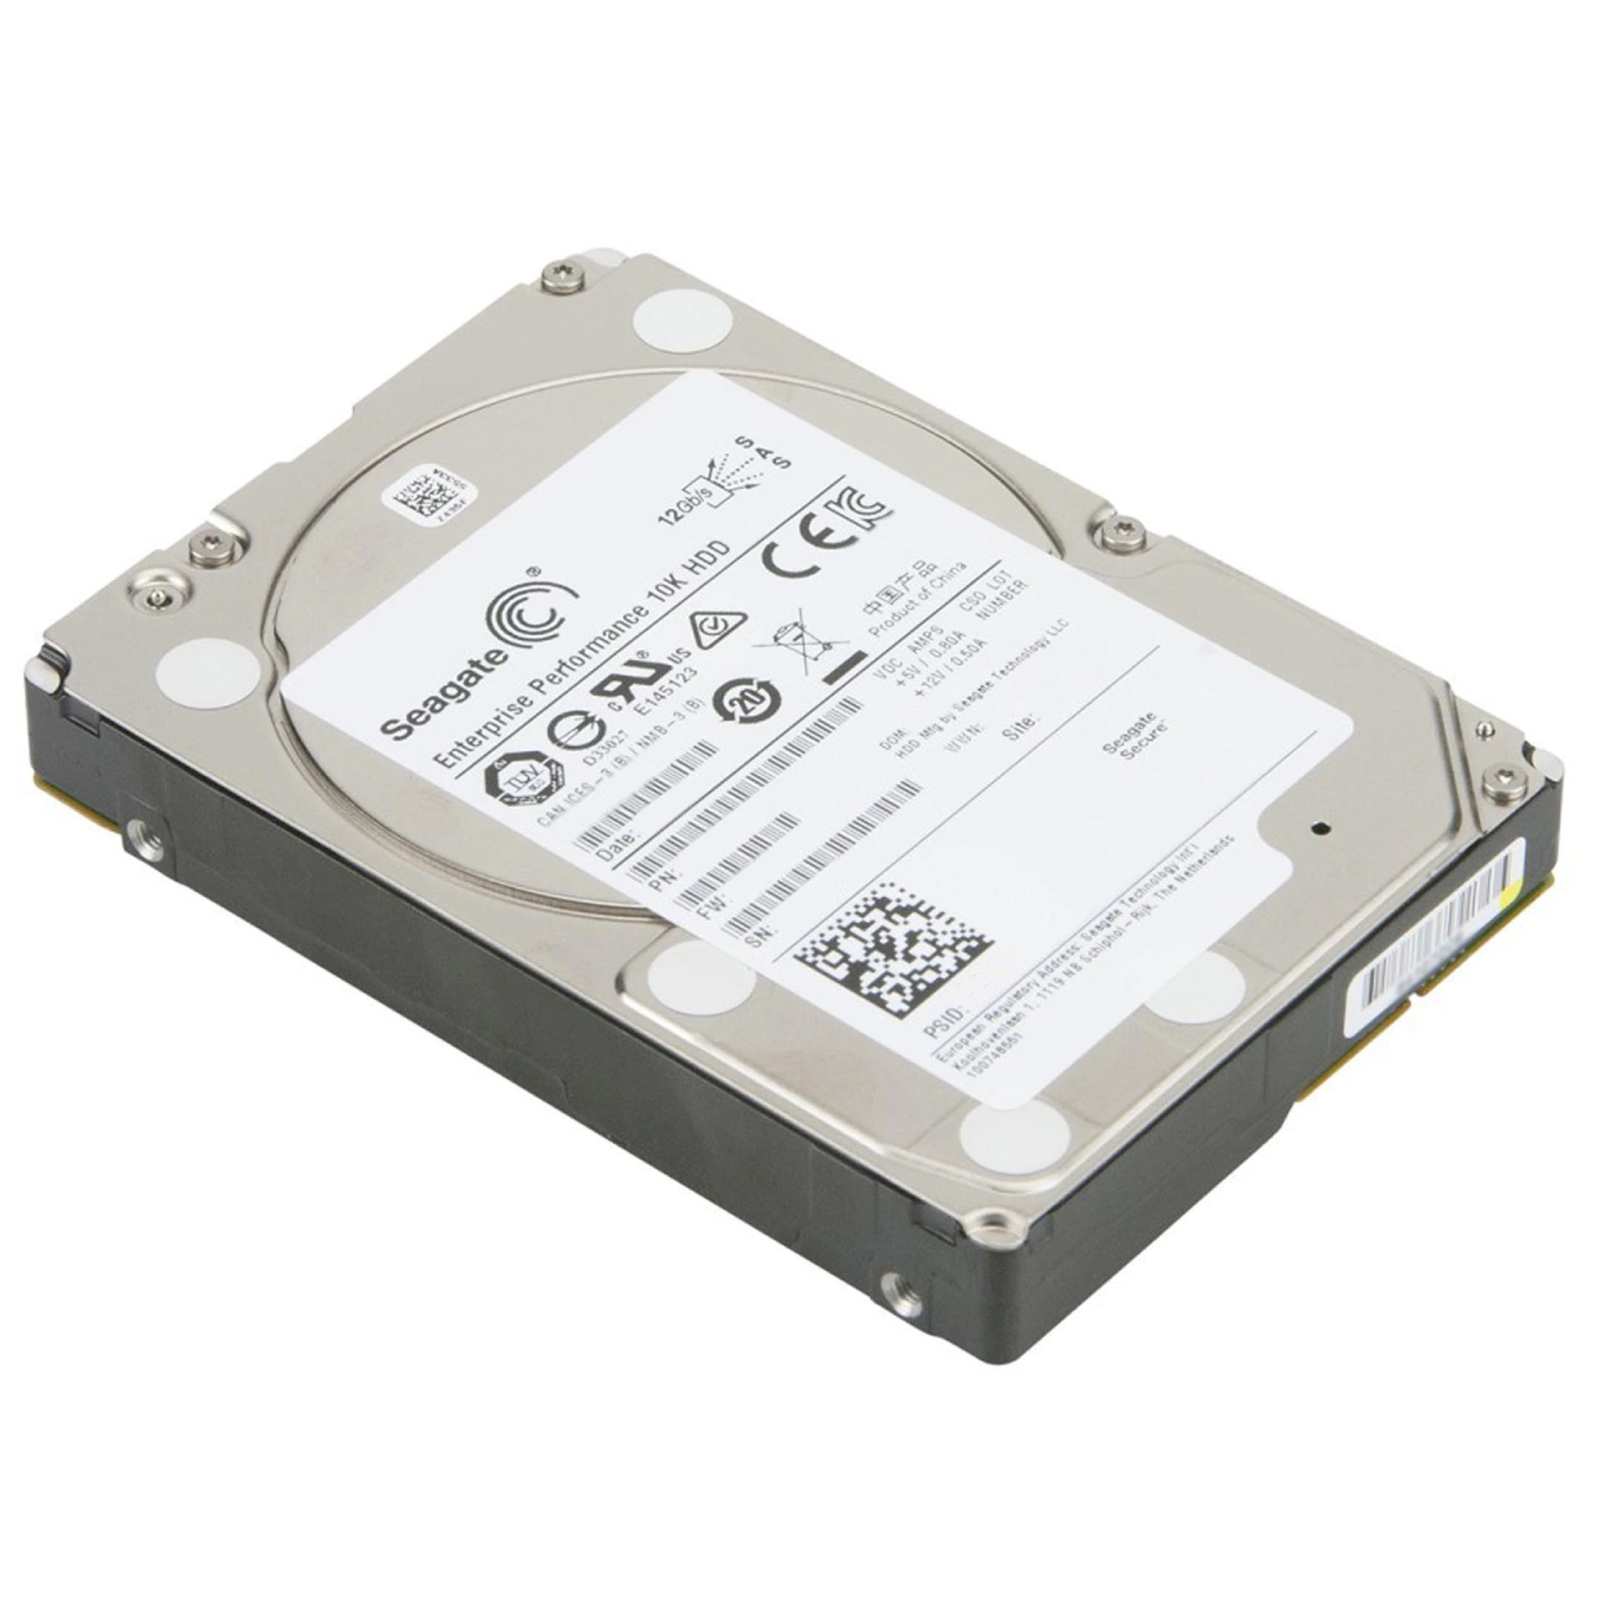 Жорсткий диск для сервера 1.2TB SAS3 10K 12Gb/s 256M 2.5" Seagate Supermicro (HDD-2A1200-ST1200MM0129)